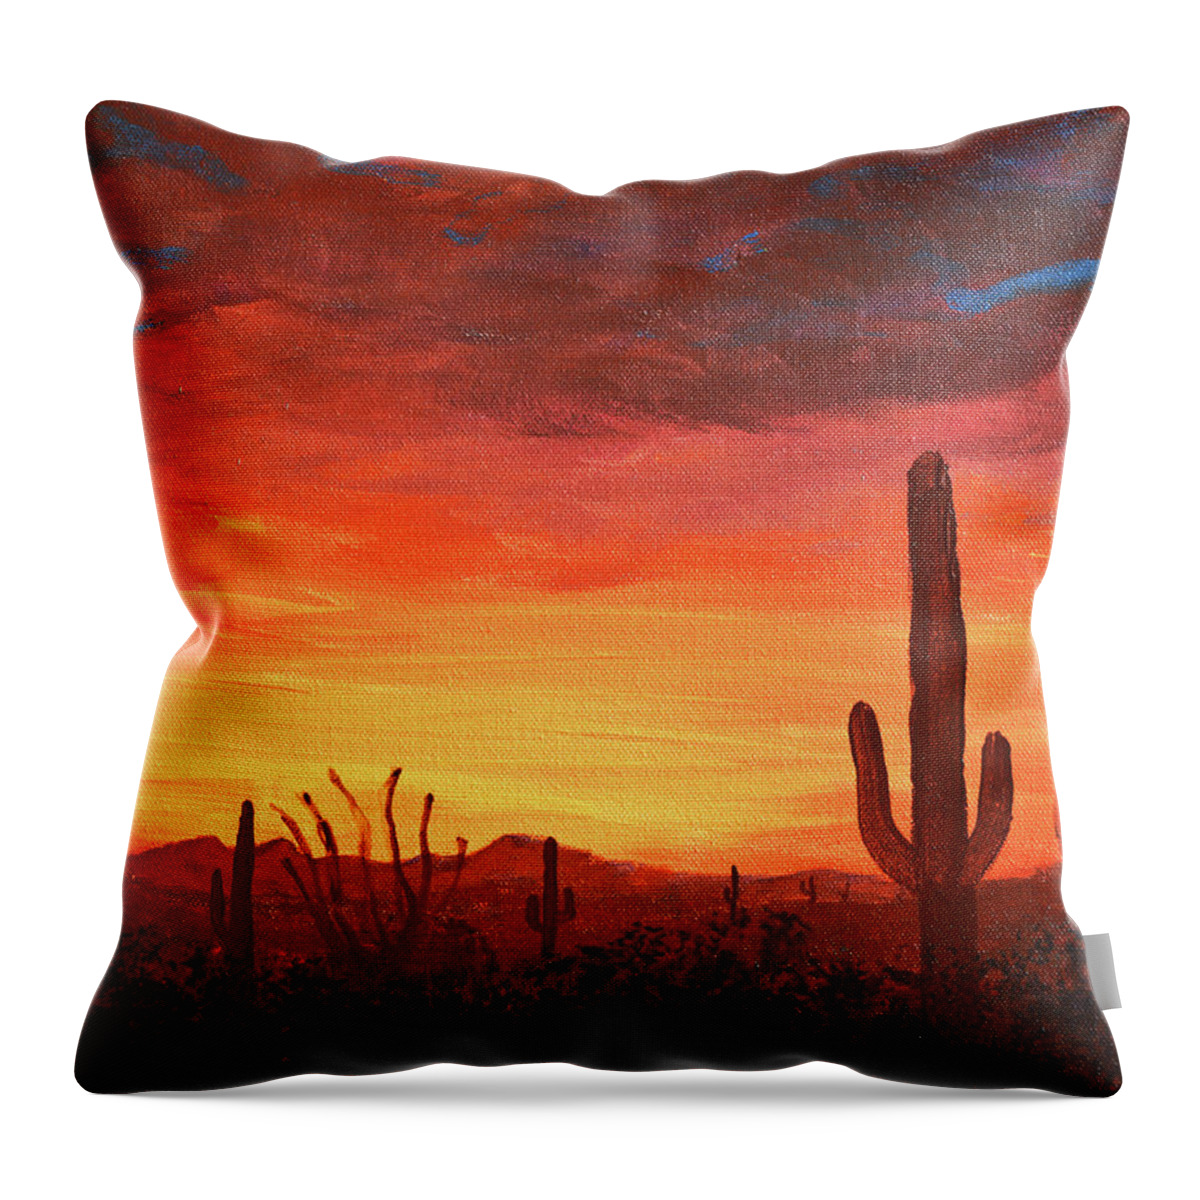 Arizona Throw Pillow featuring the painting Arizona Pastel Skies by Chance Kafka